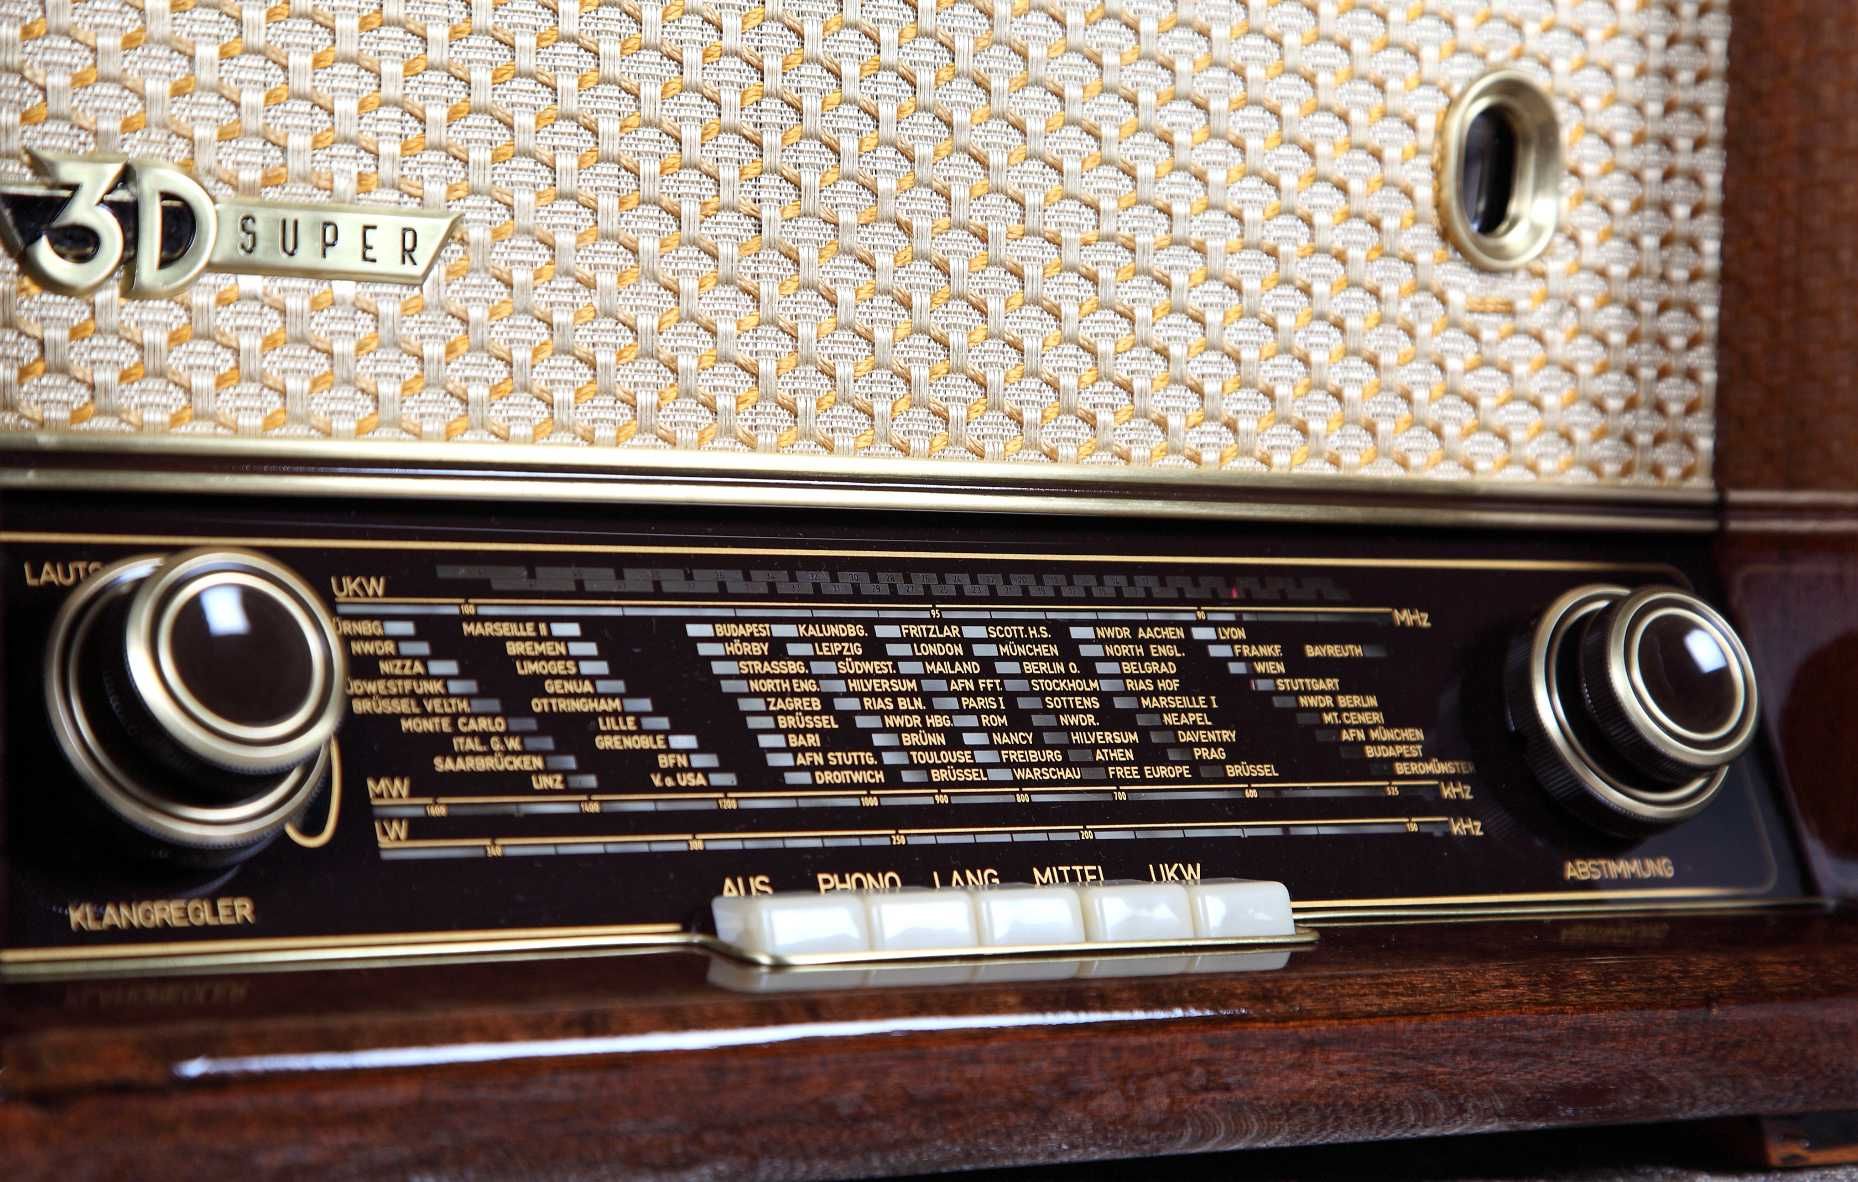 Vand radio pe lampi Neckermann, type 96611 WR, complet restaurat